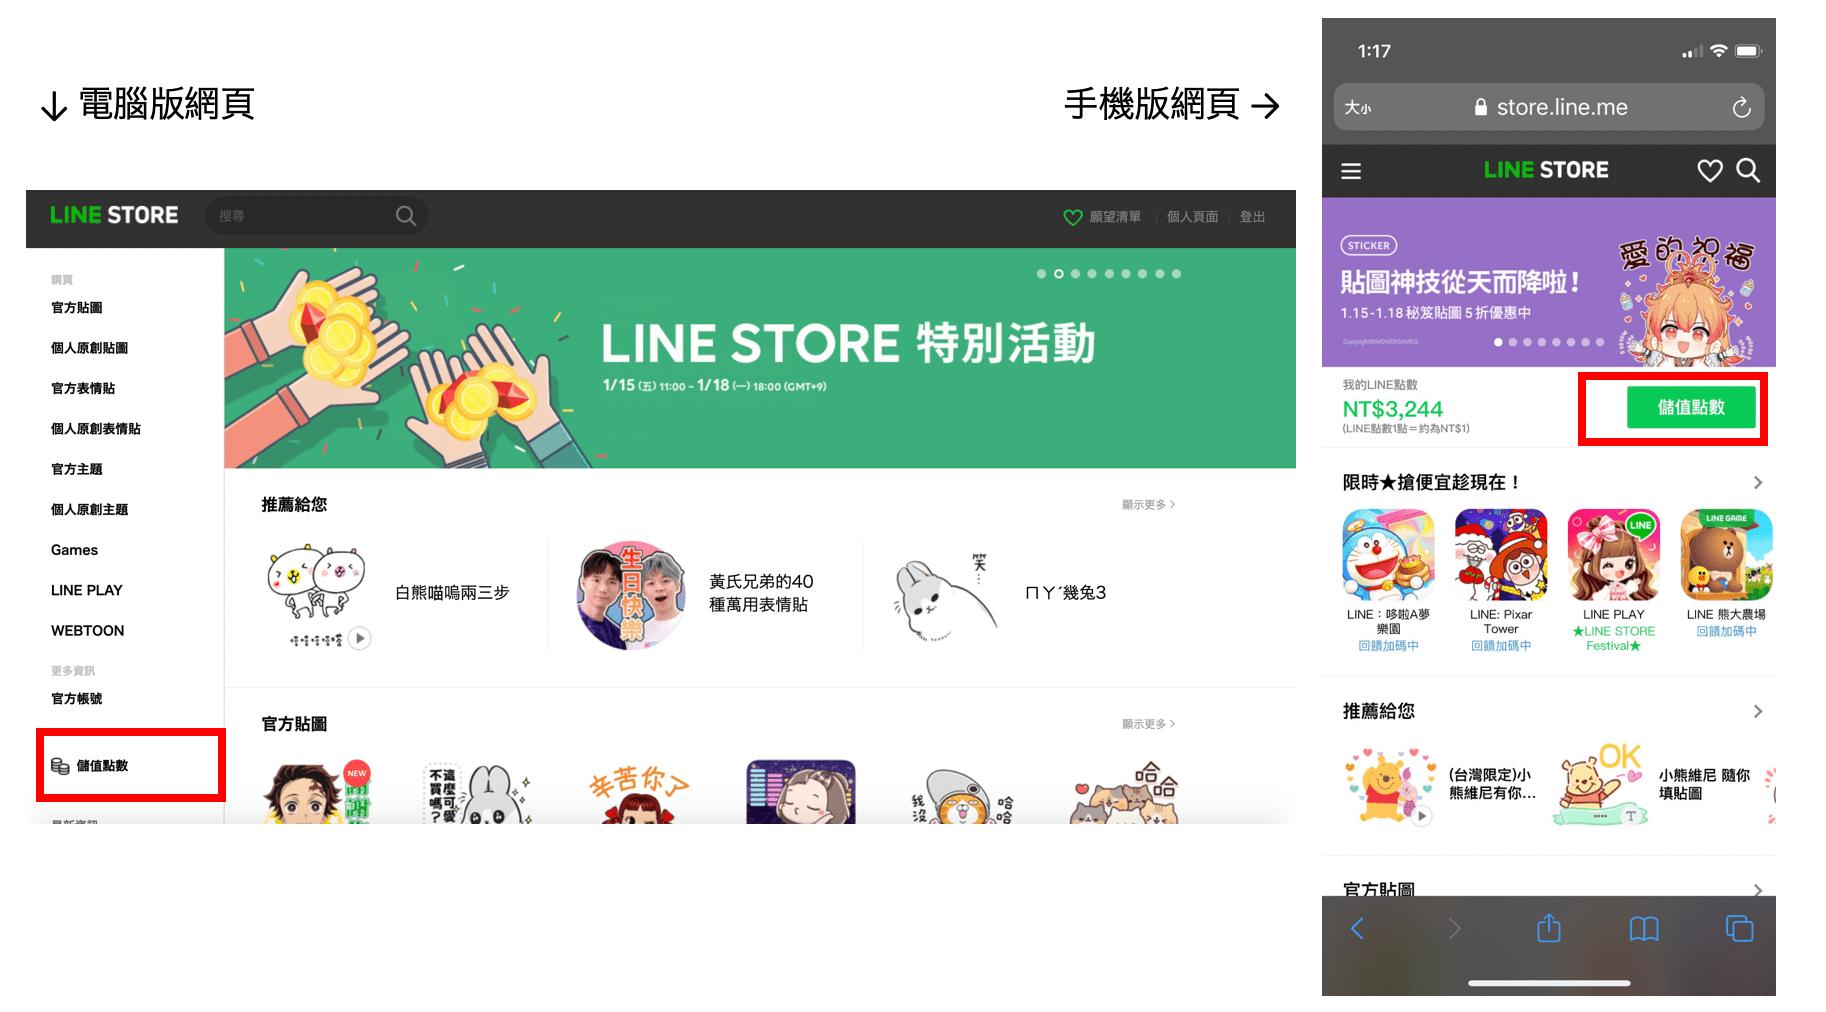 Mycard Line指定卡儲值教學 21更新版 Line Store